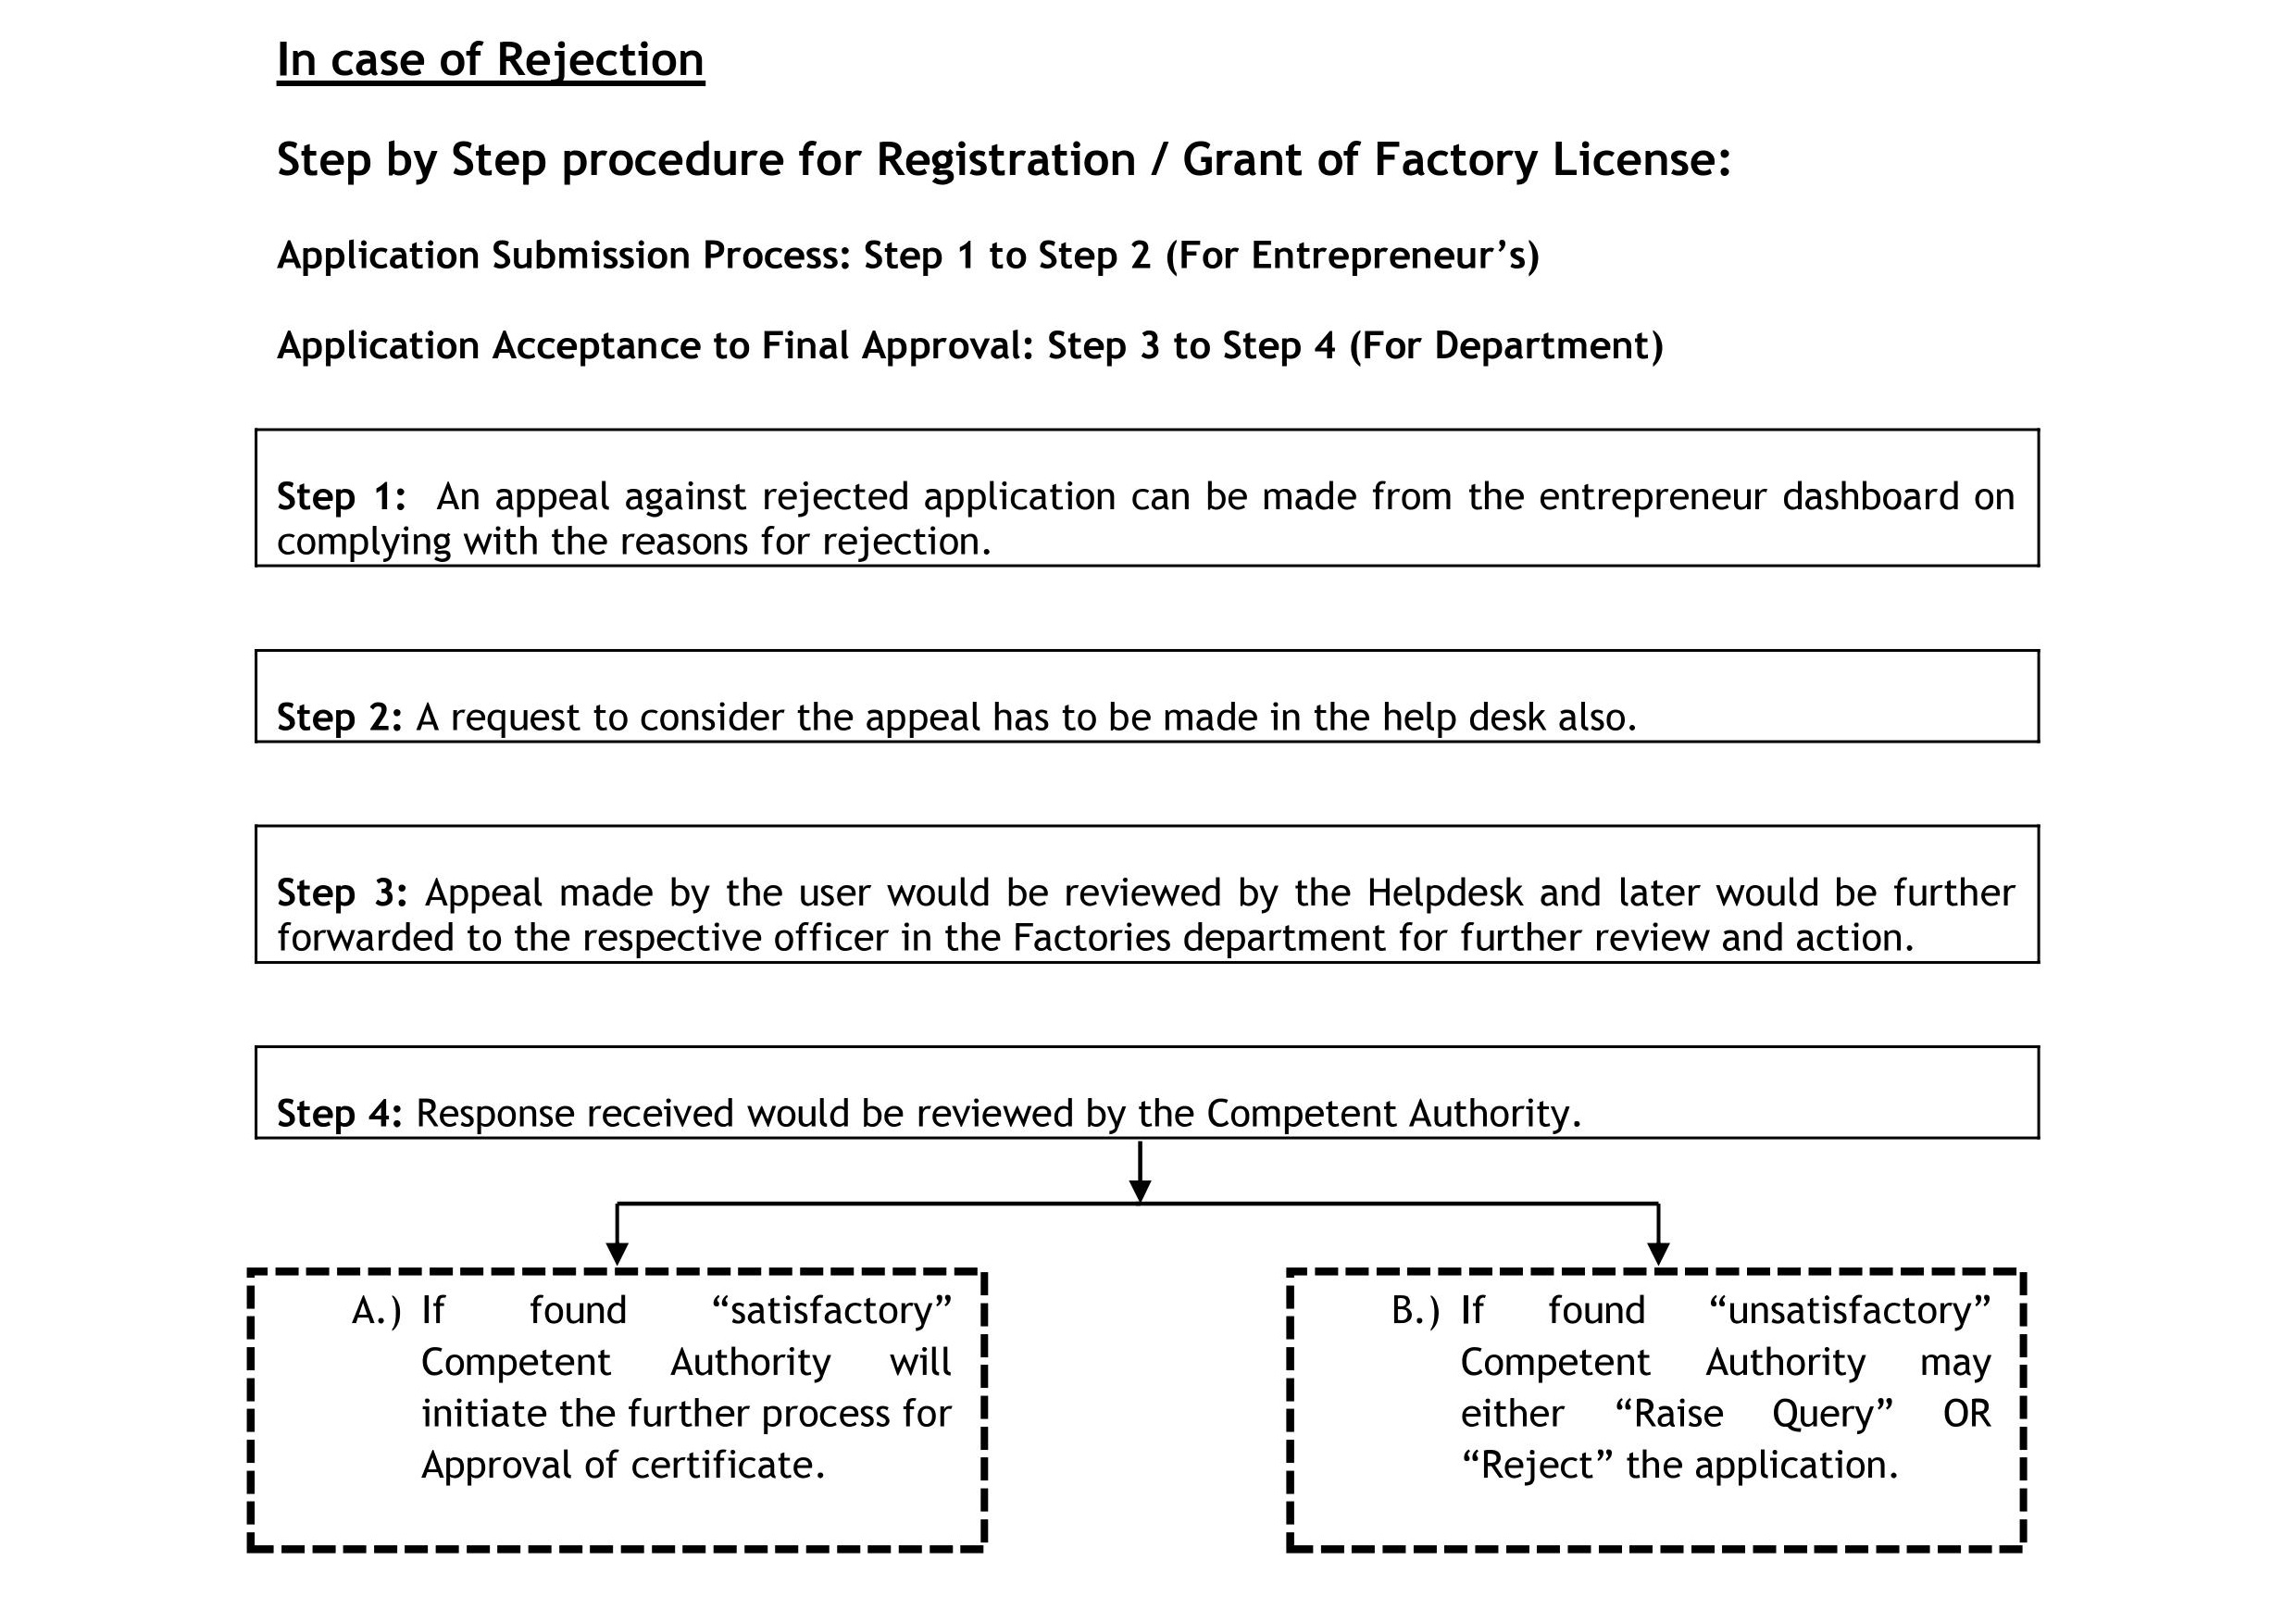 Grant License Step by Step Procedure Image